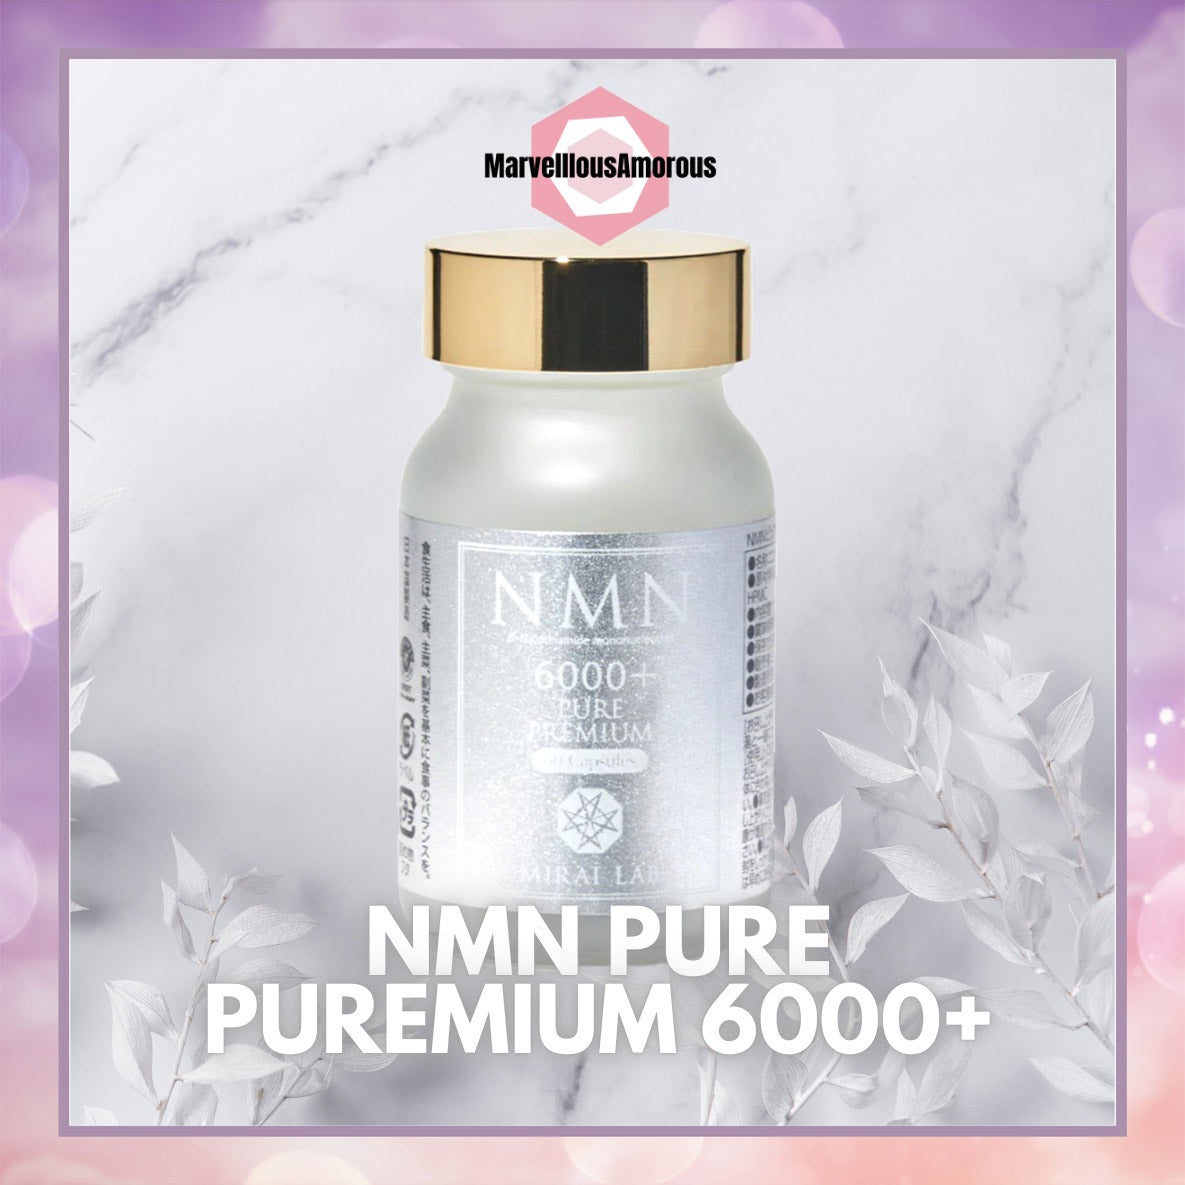 NMN PURE PREMIUM 6000+